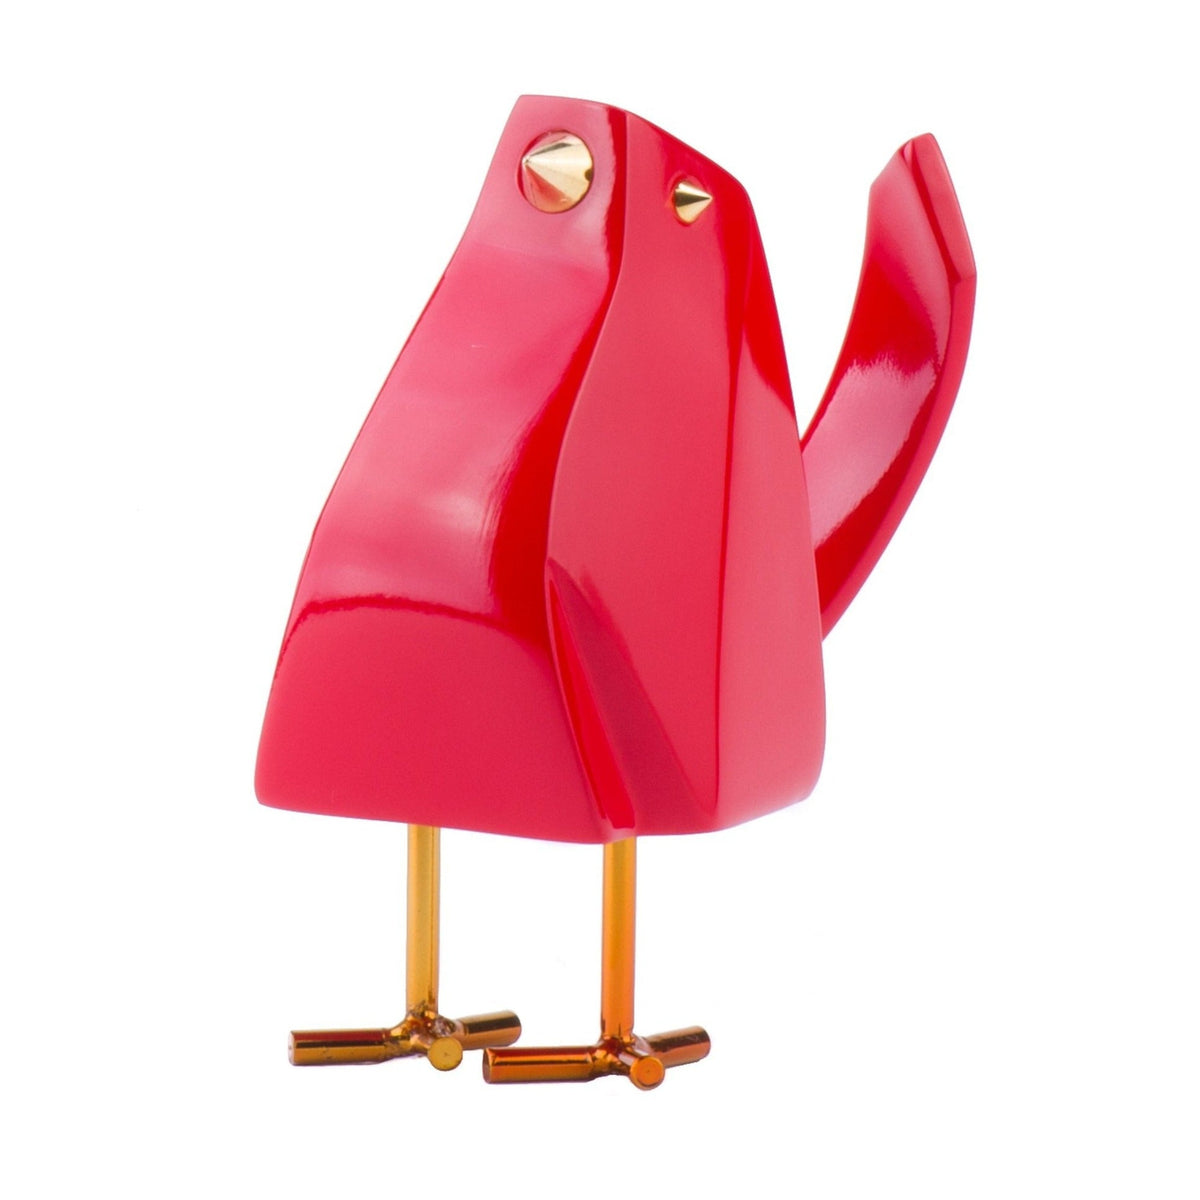 Bird Sculpture in Red / Decorative Objects / Figurine